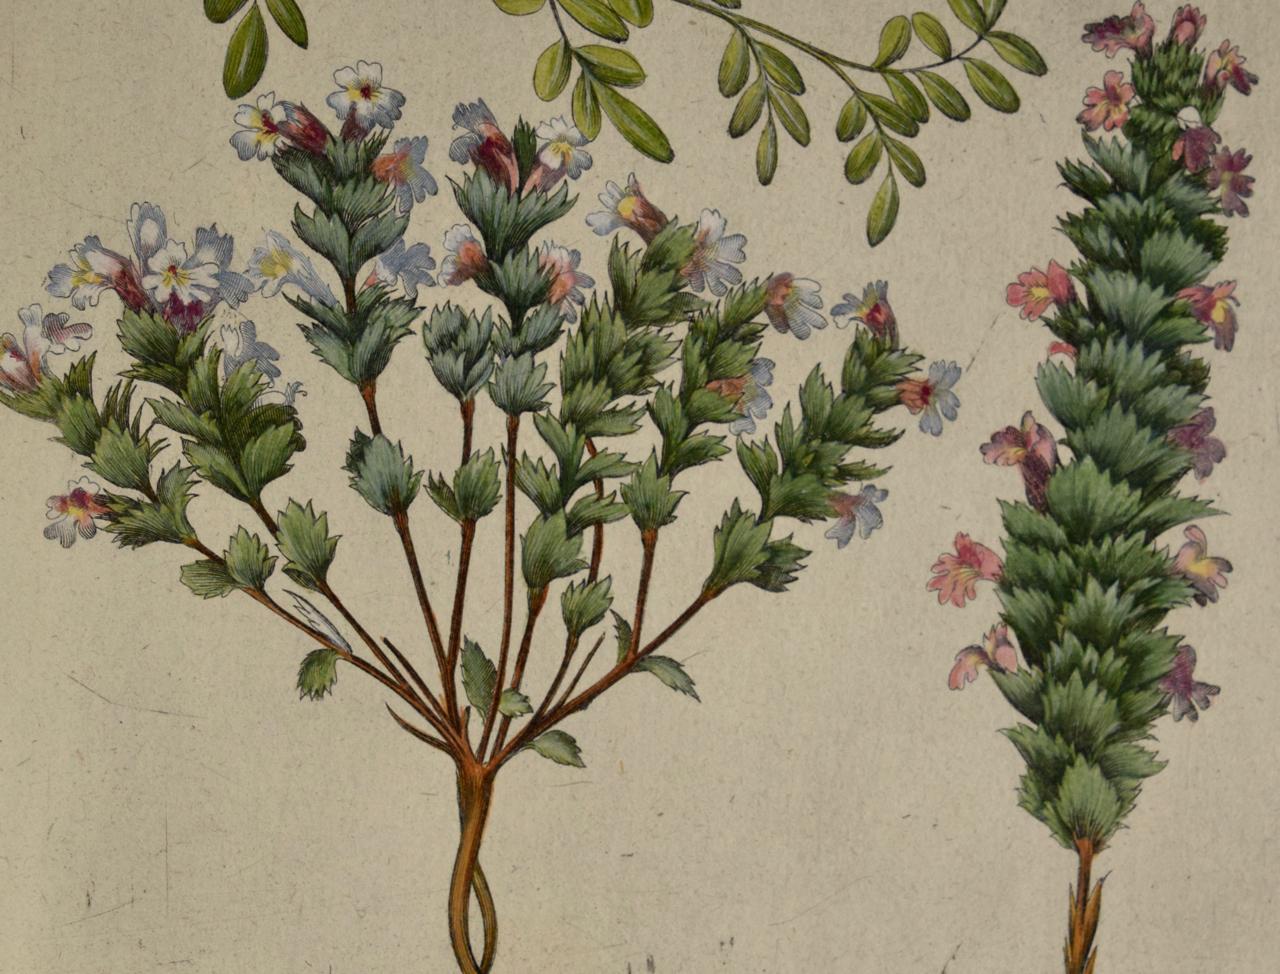 Flowering Jasmine and Laurel Plants: A Besler Hand-colored Botanical Engraving - Brown Figurative Print by Basilius Besler